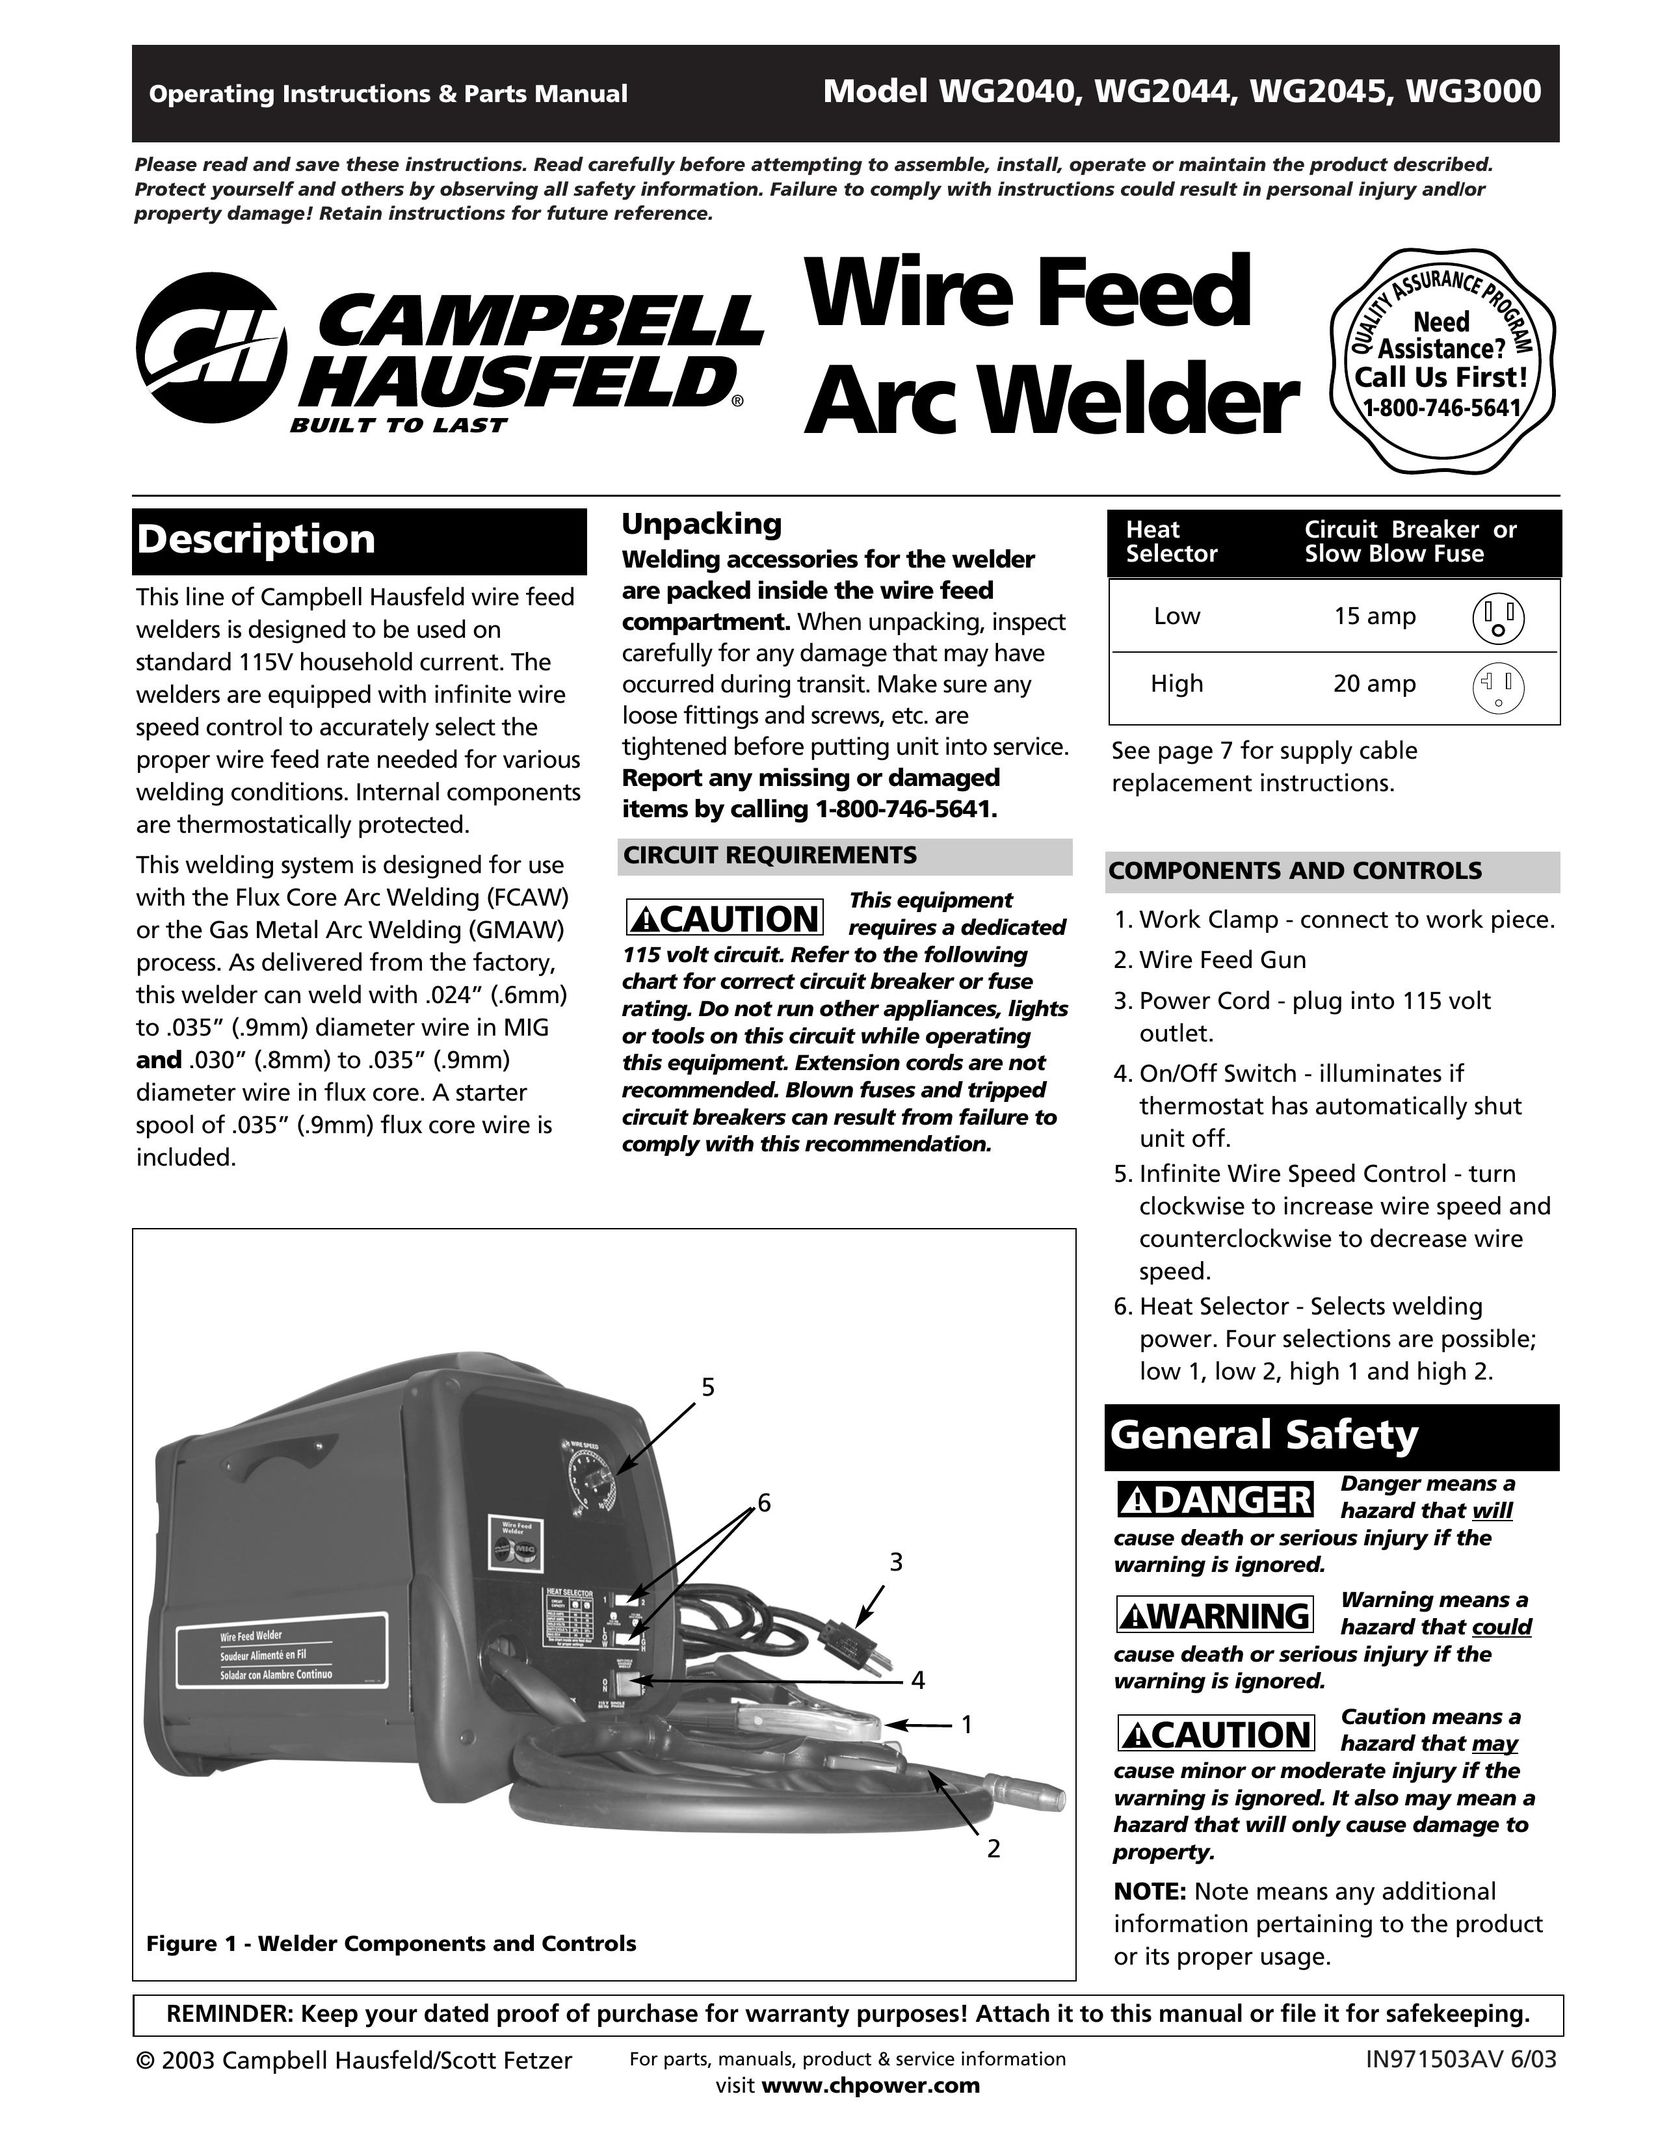 Campbell Hausfeld WG2045 PDAs & Smartphones User Manual